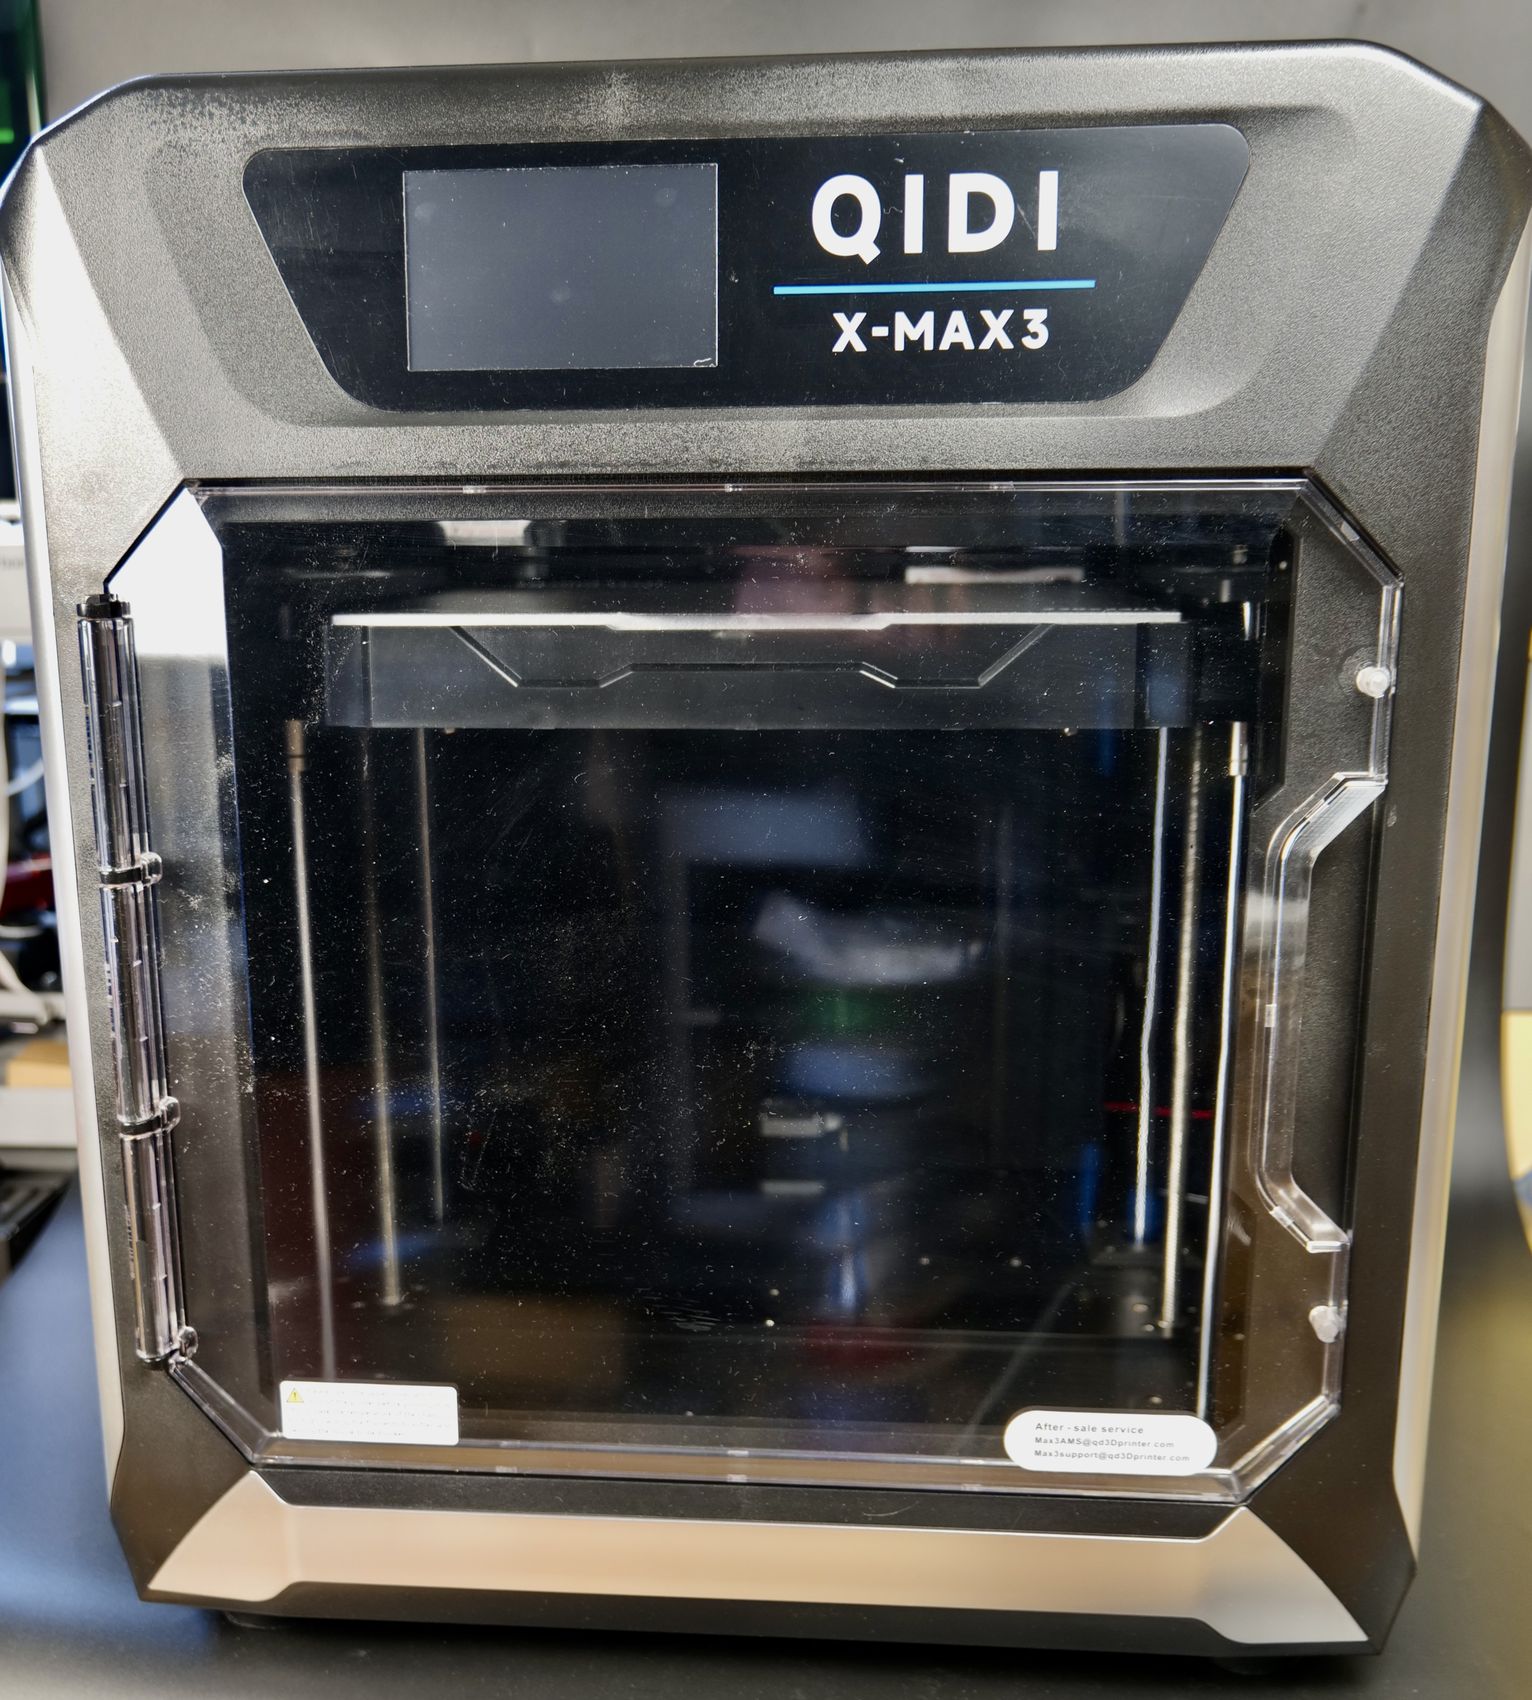 QIDI X MAX 3 Design1 | QIDI X-MAX 3 Review: Big Printer with Good Results